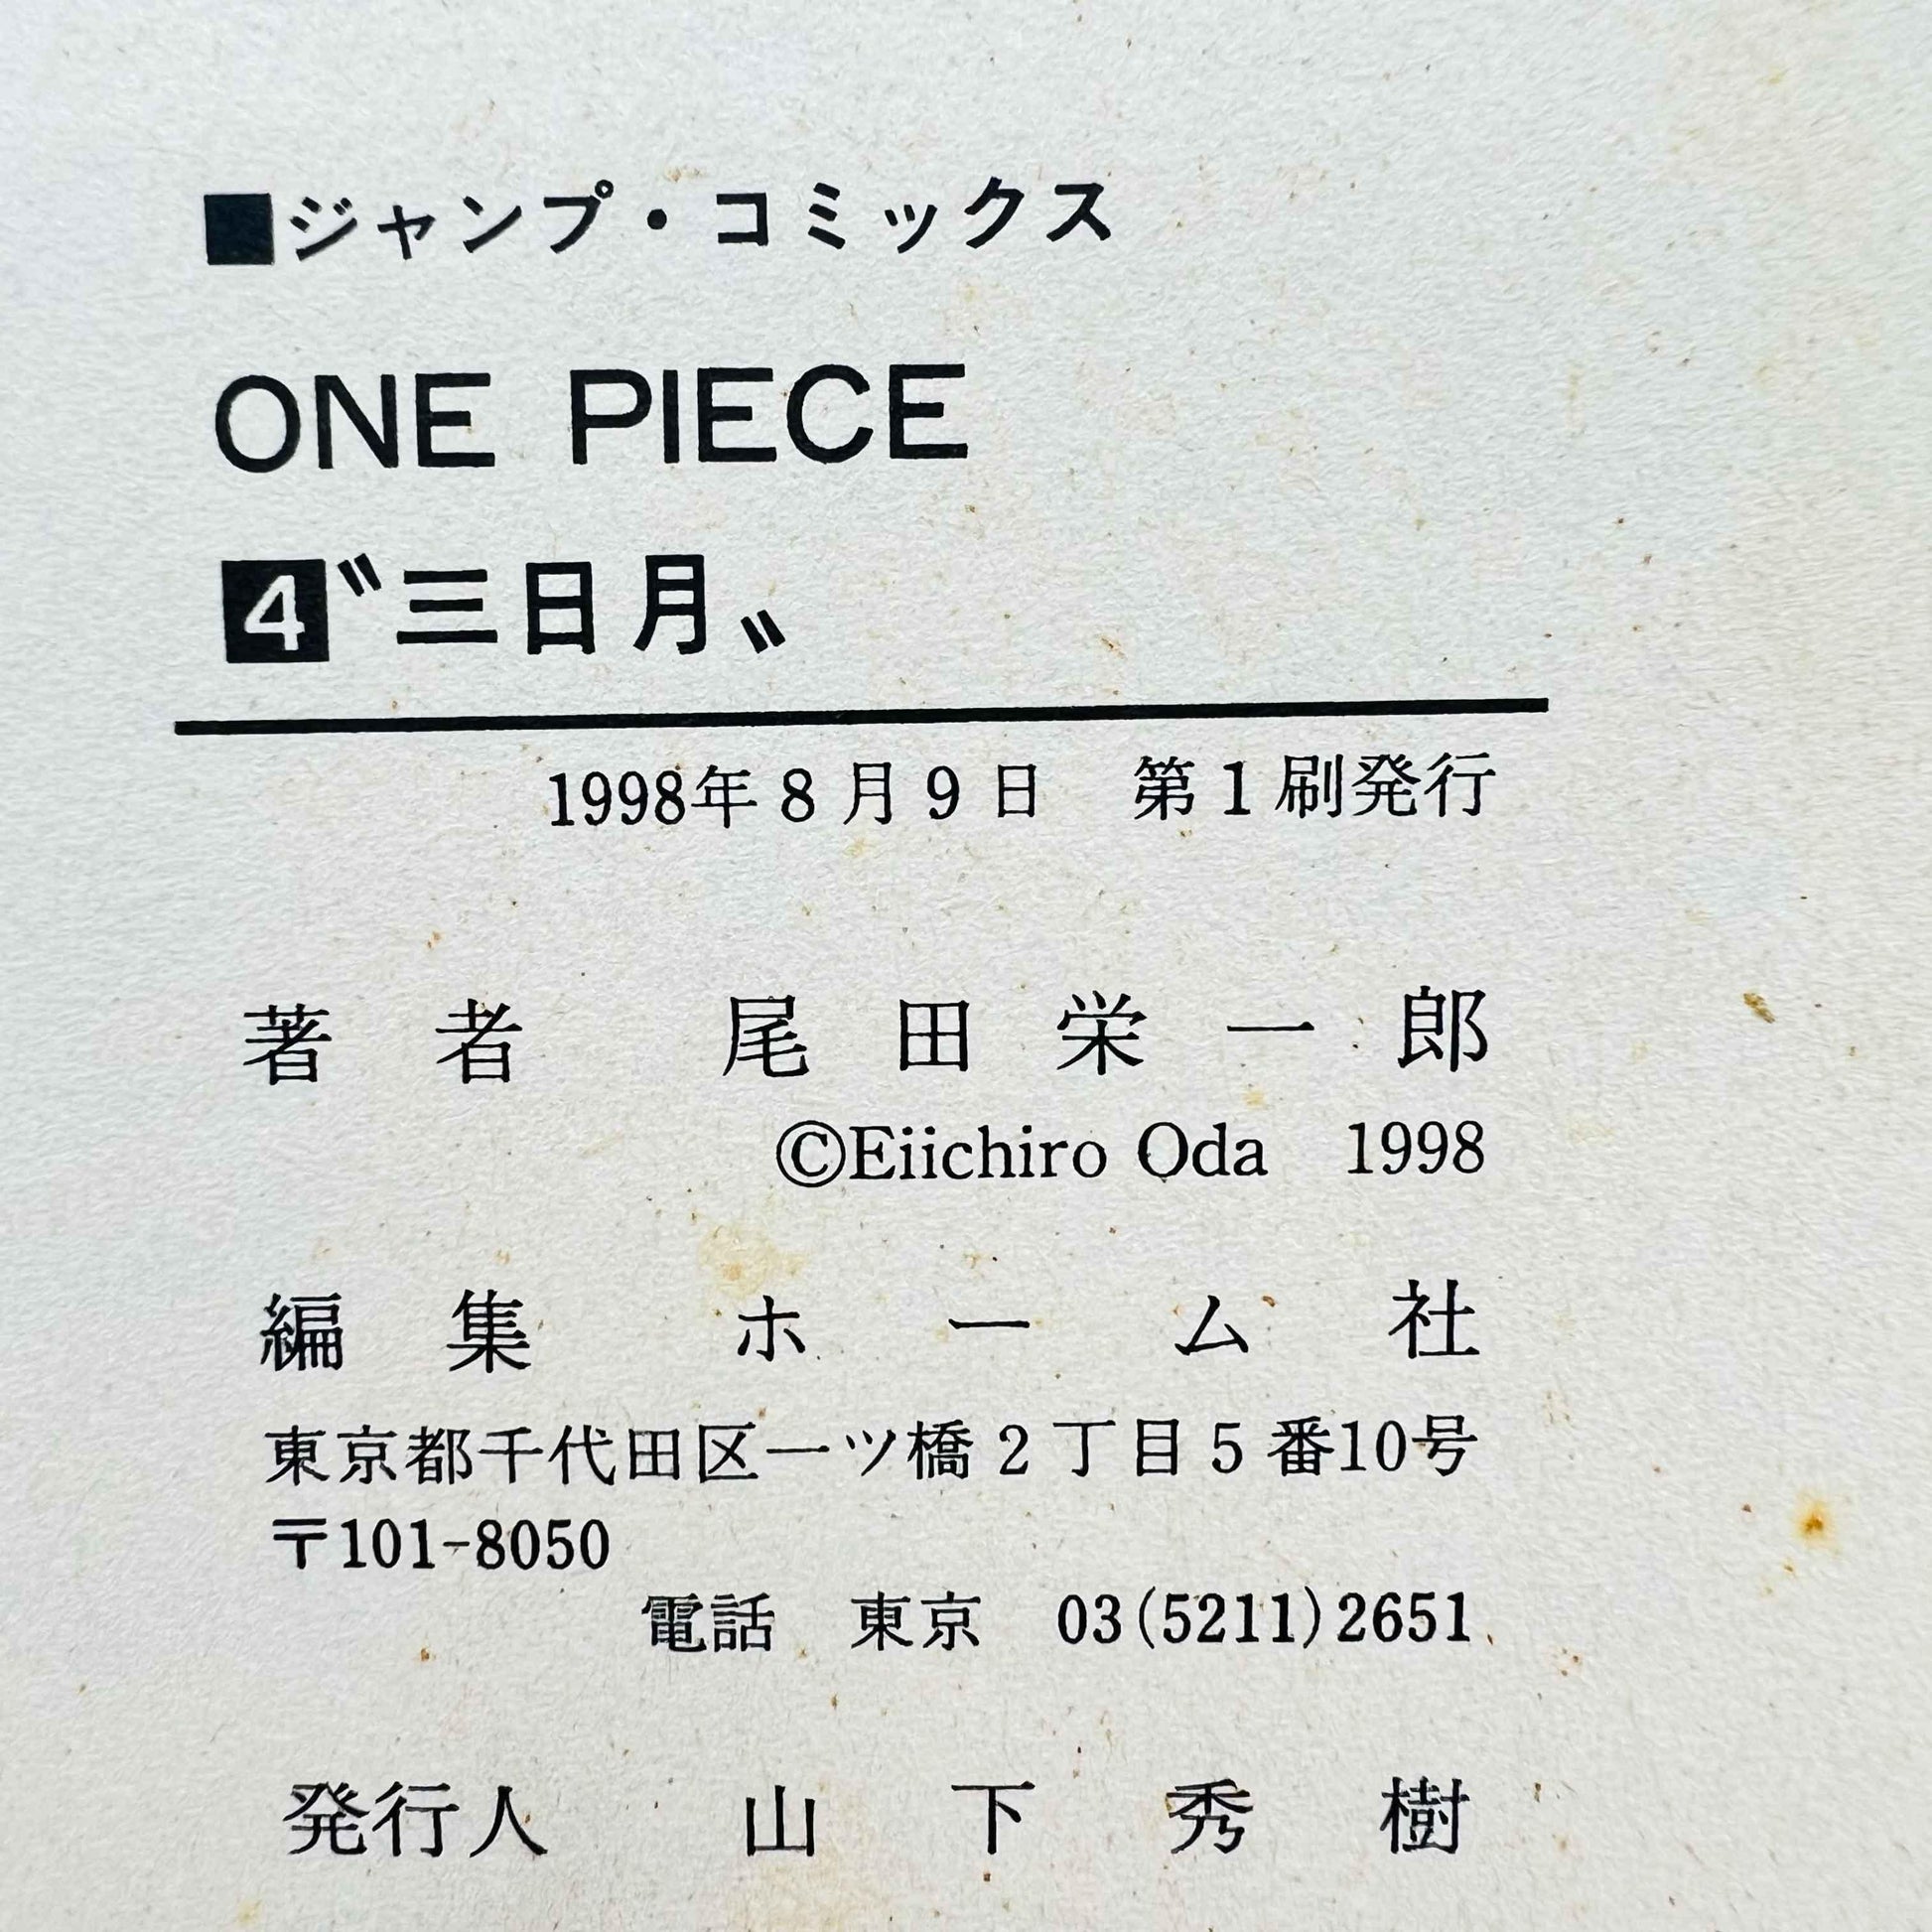 One Piece - Volume 04 - 1stPrint.net - 1st First Print Edition Manga Store - M-OP-04-001